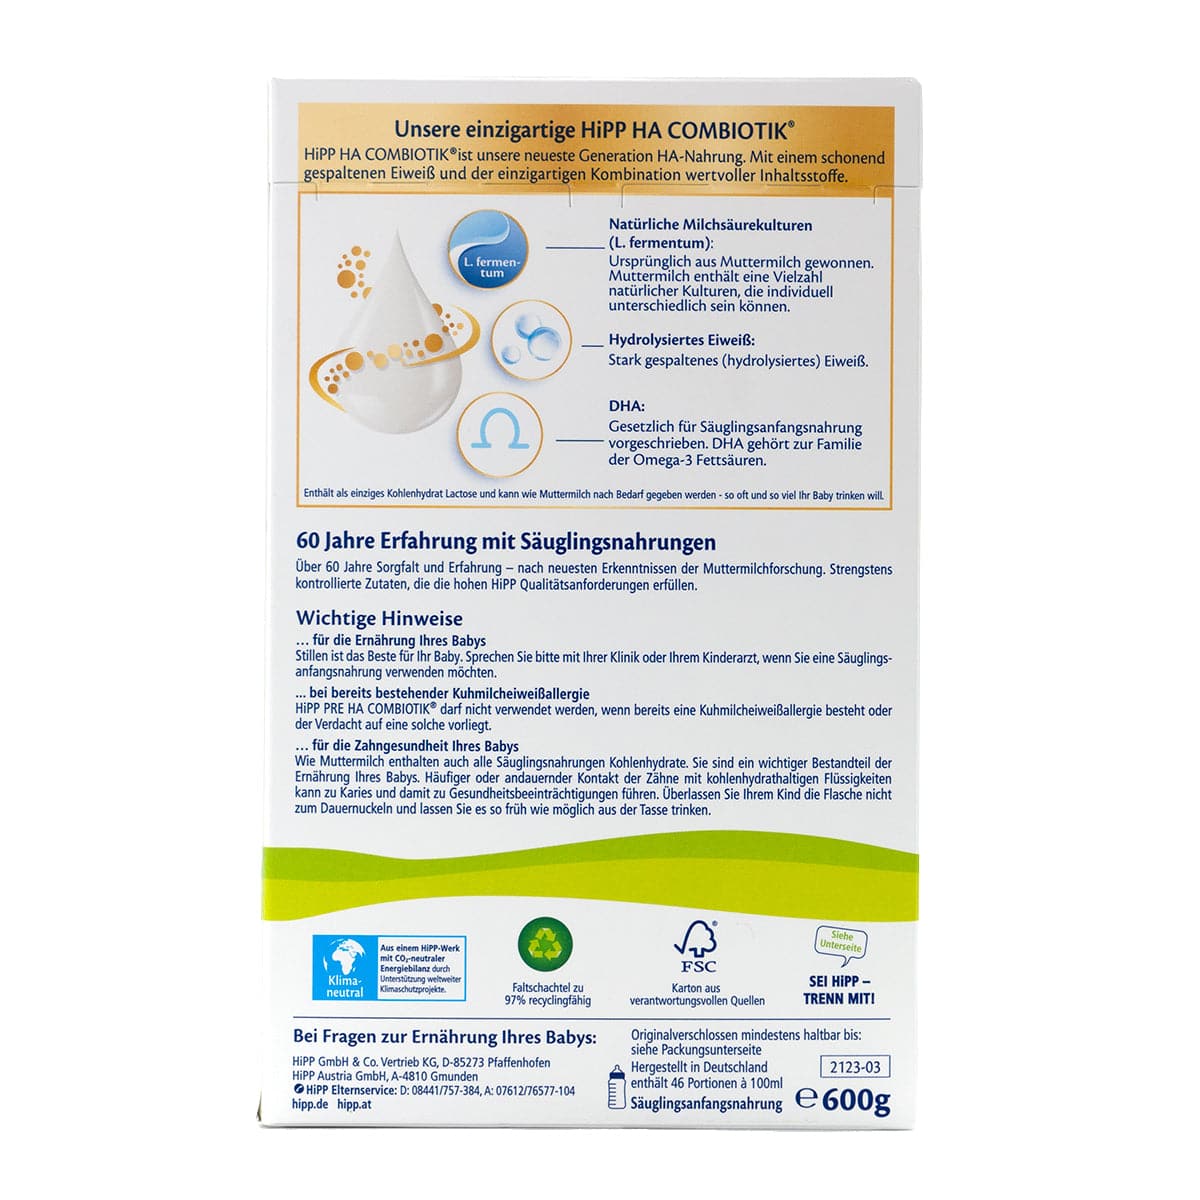 HiPP Hypoallergenic (HA) Stage PRE - Information